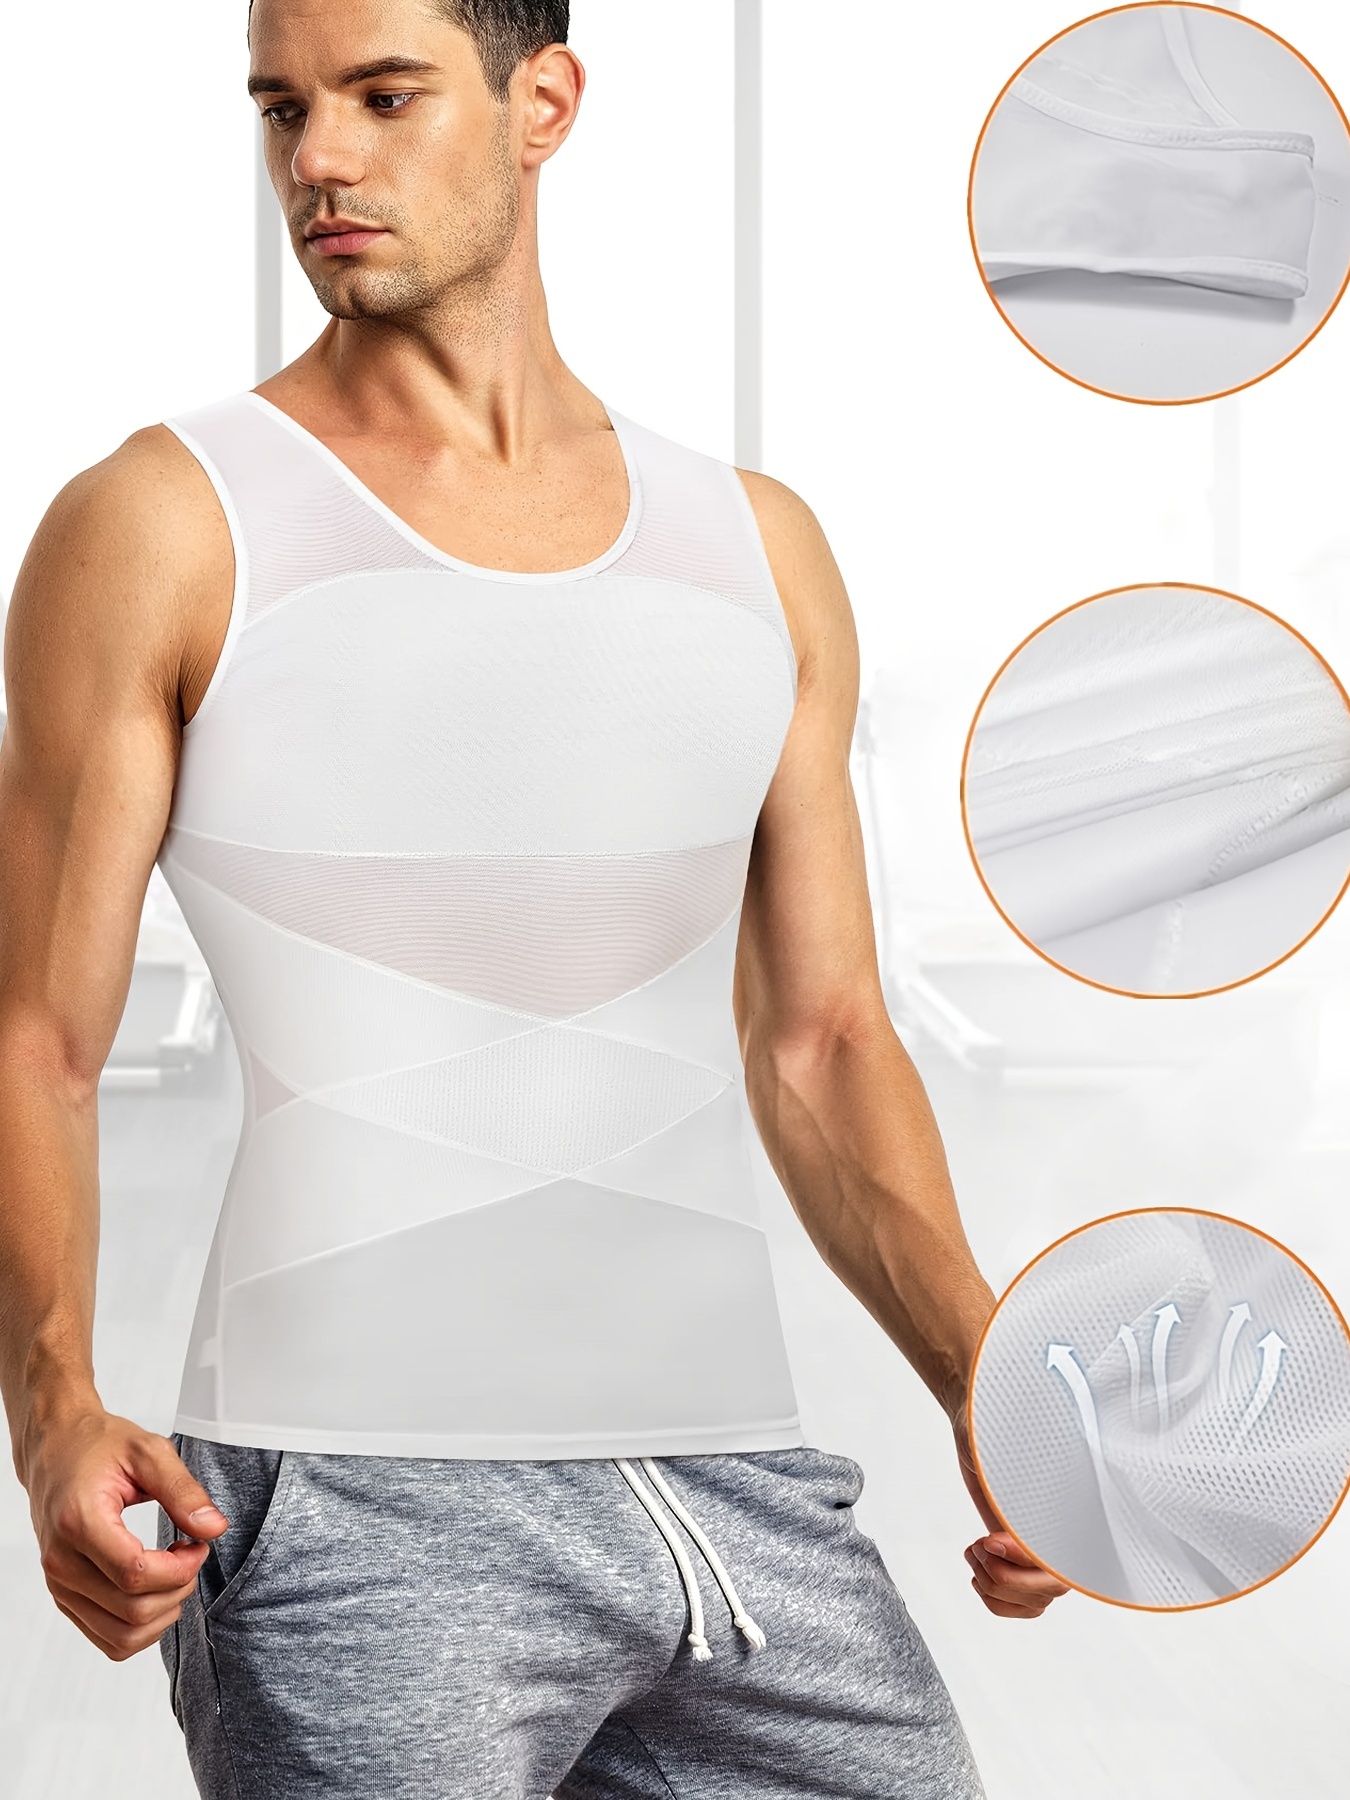 Mens Compression Shirts Slimming Body Shaper Vest Tight Tank Top